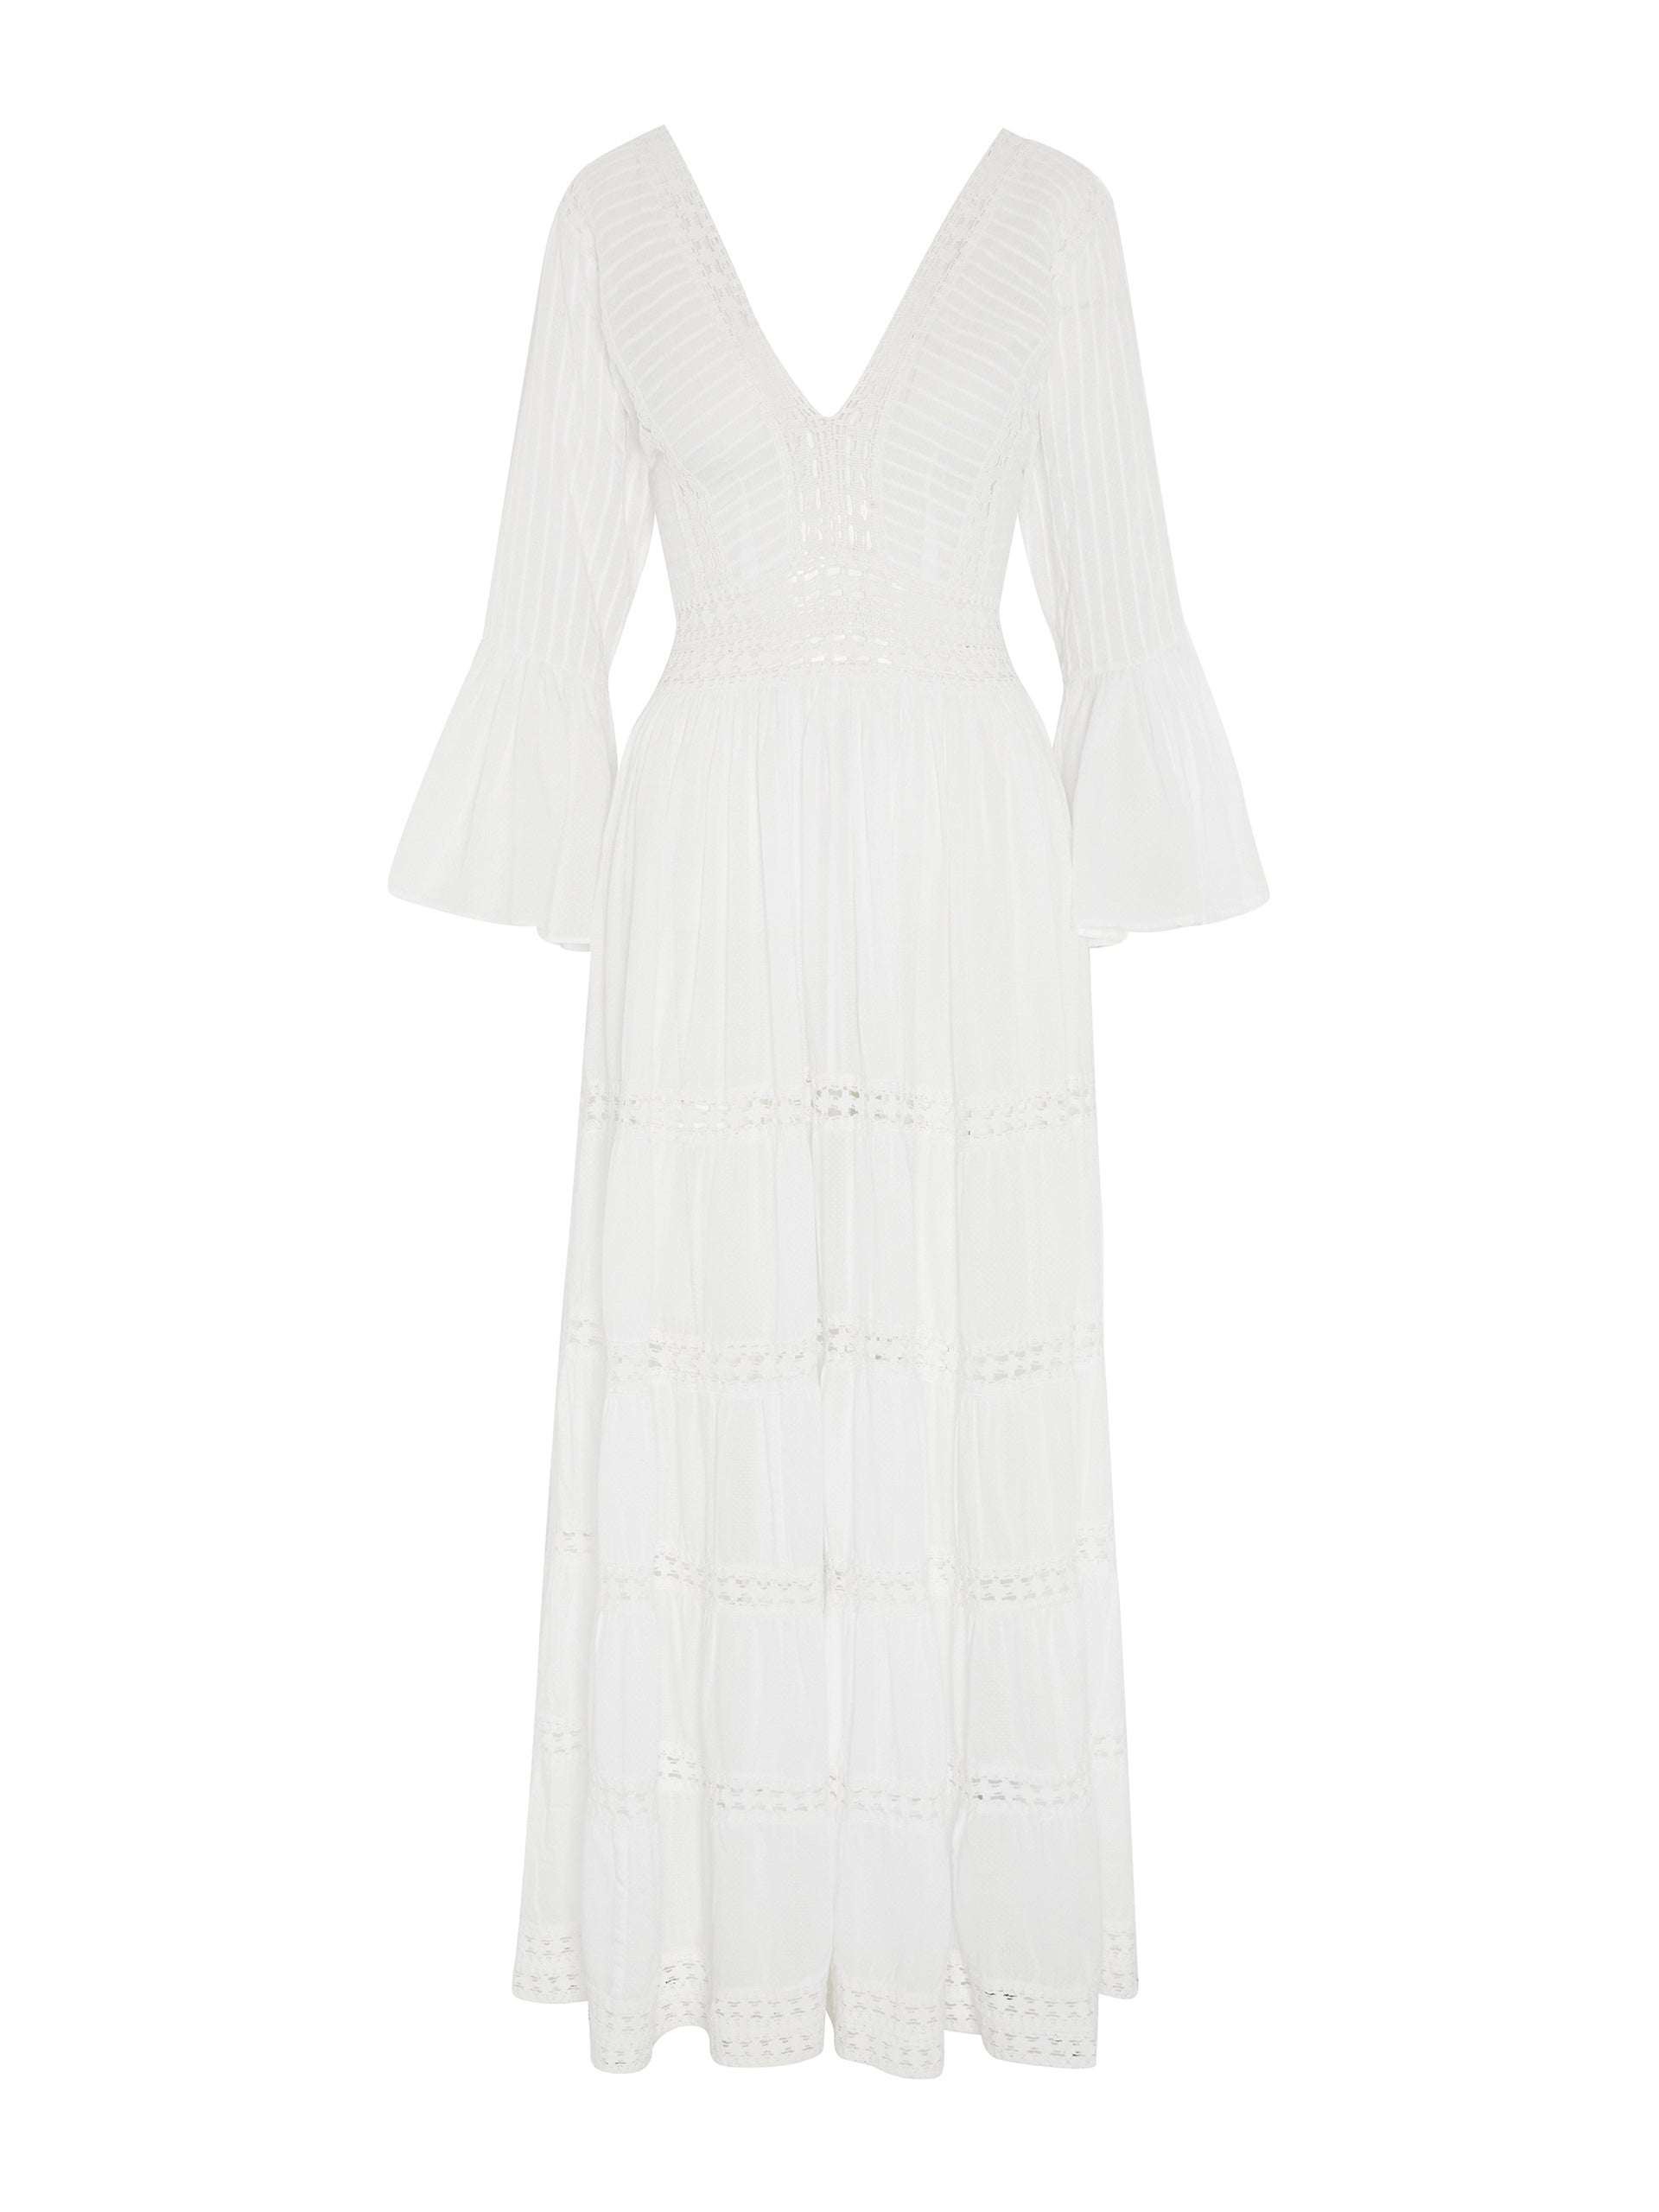 Soft white Kiro dress in Lyocell Tencel - Collagerie.com